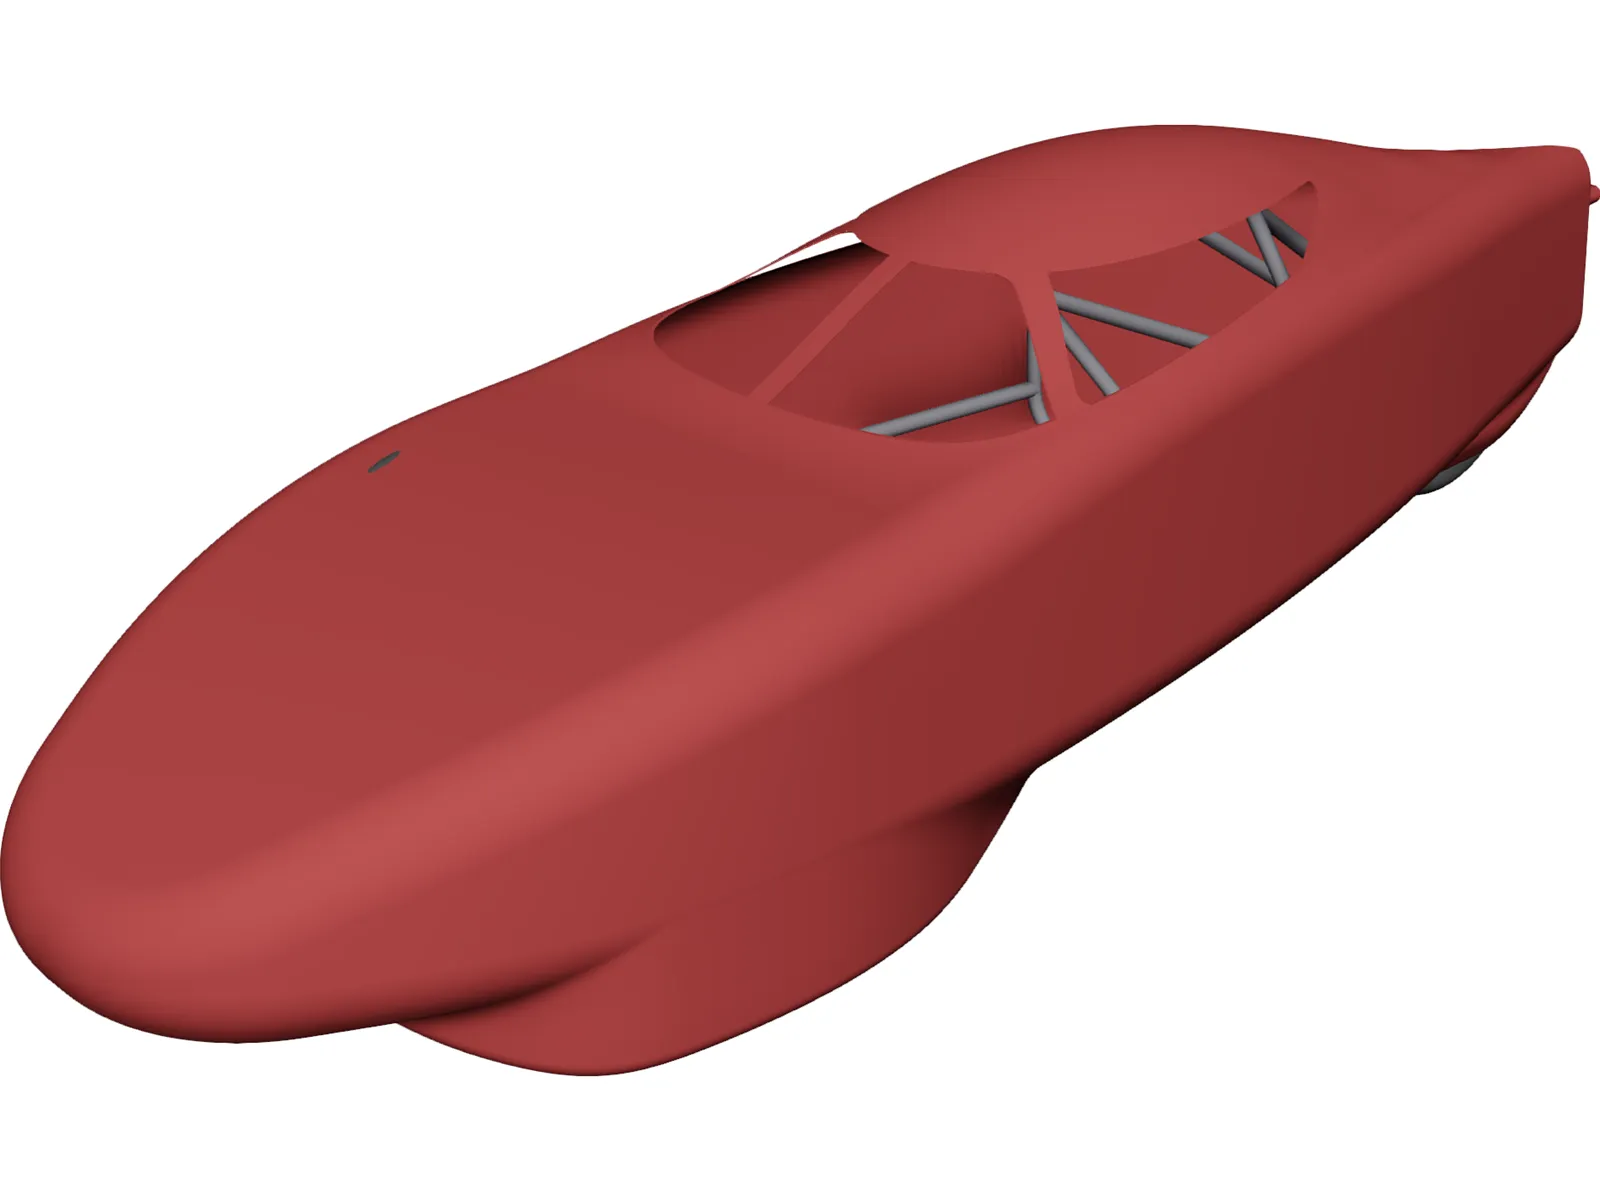 Supermileage Car SDSMT 3D Model